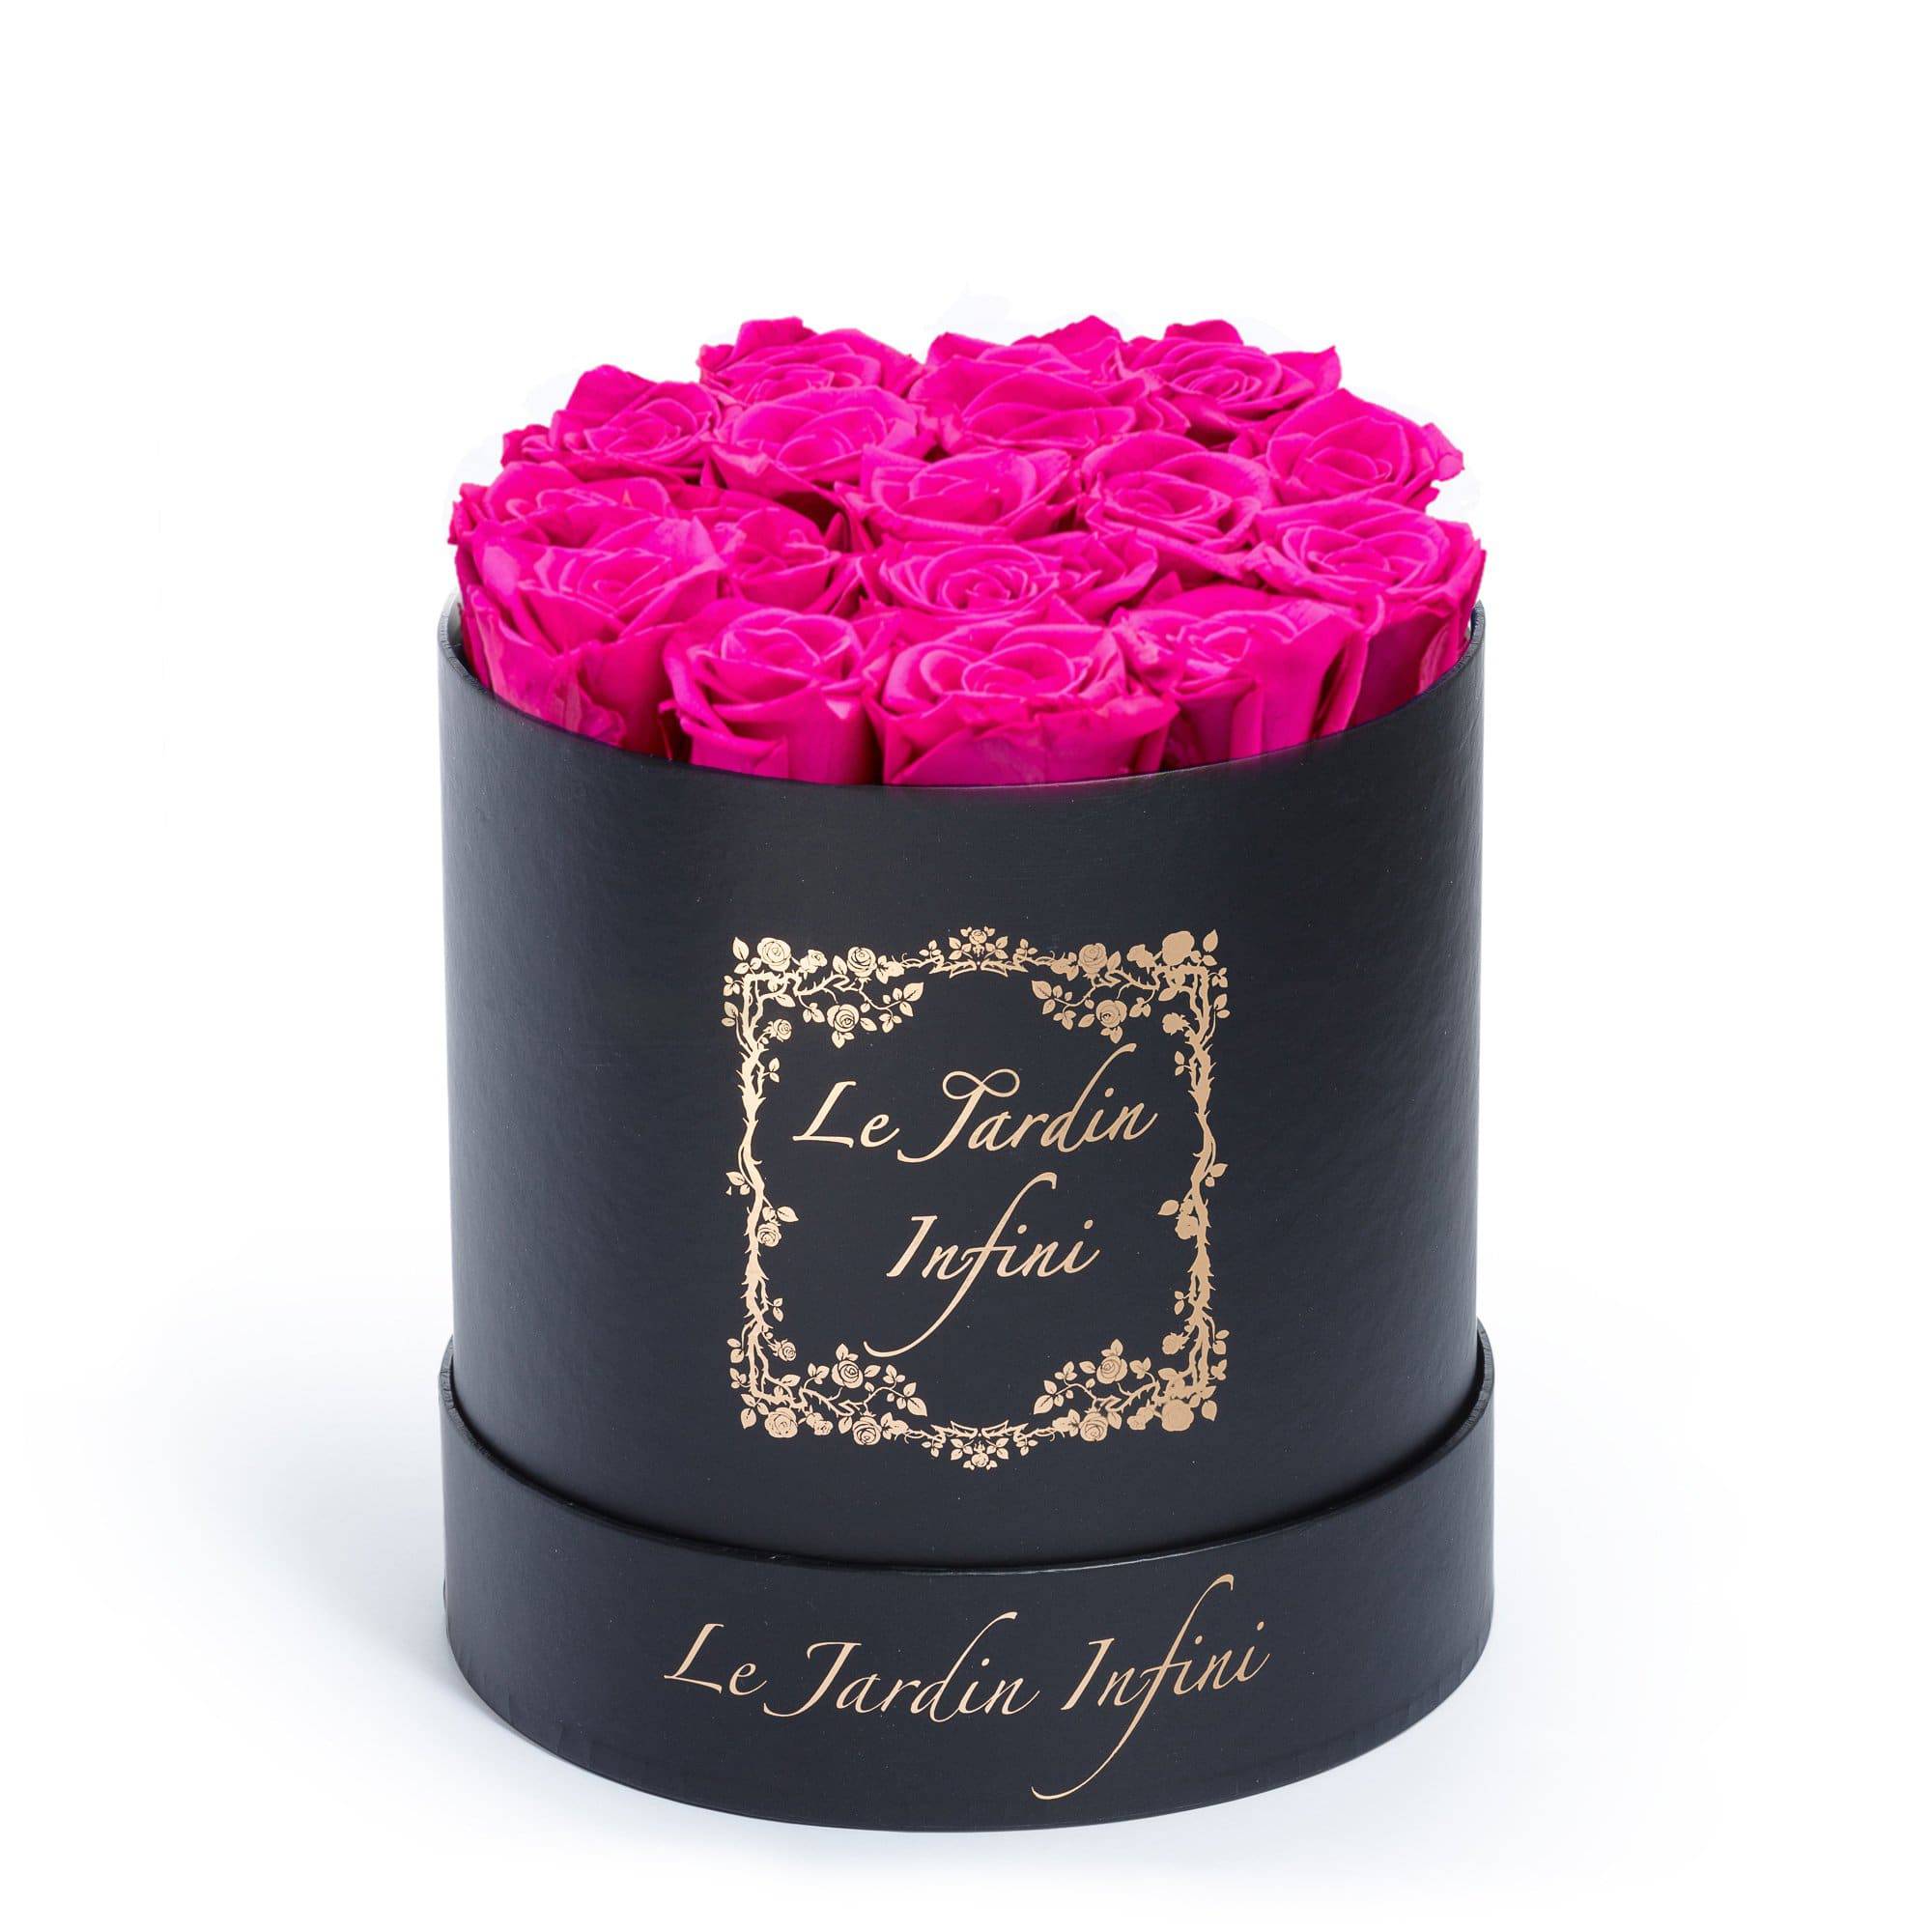 Hot Pink Preserved Roses - Medium Round Black Box